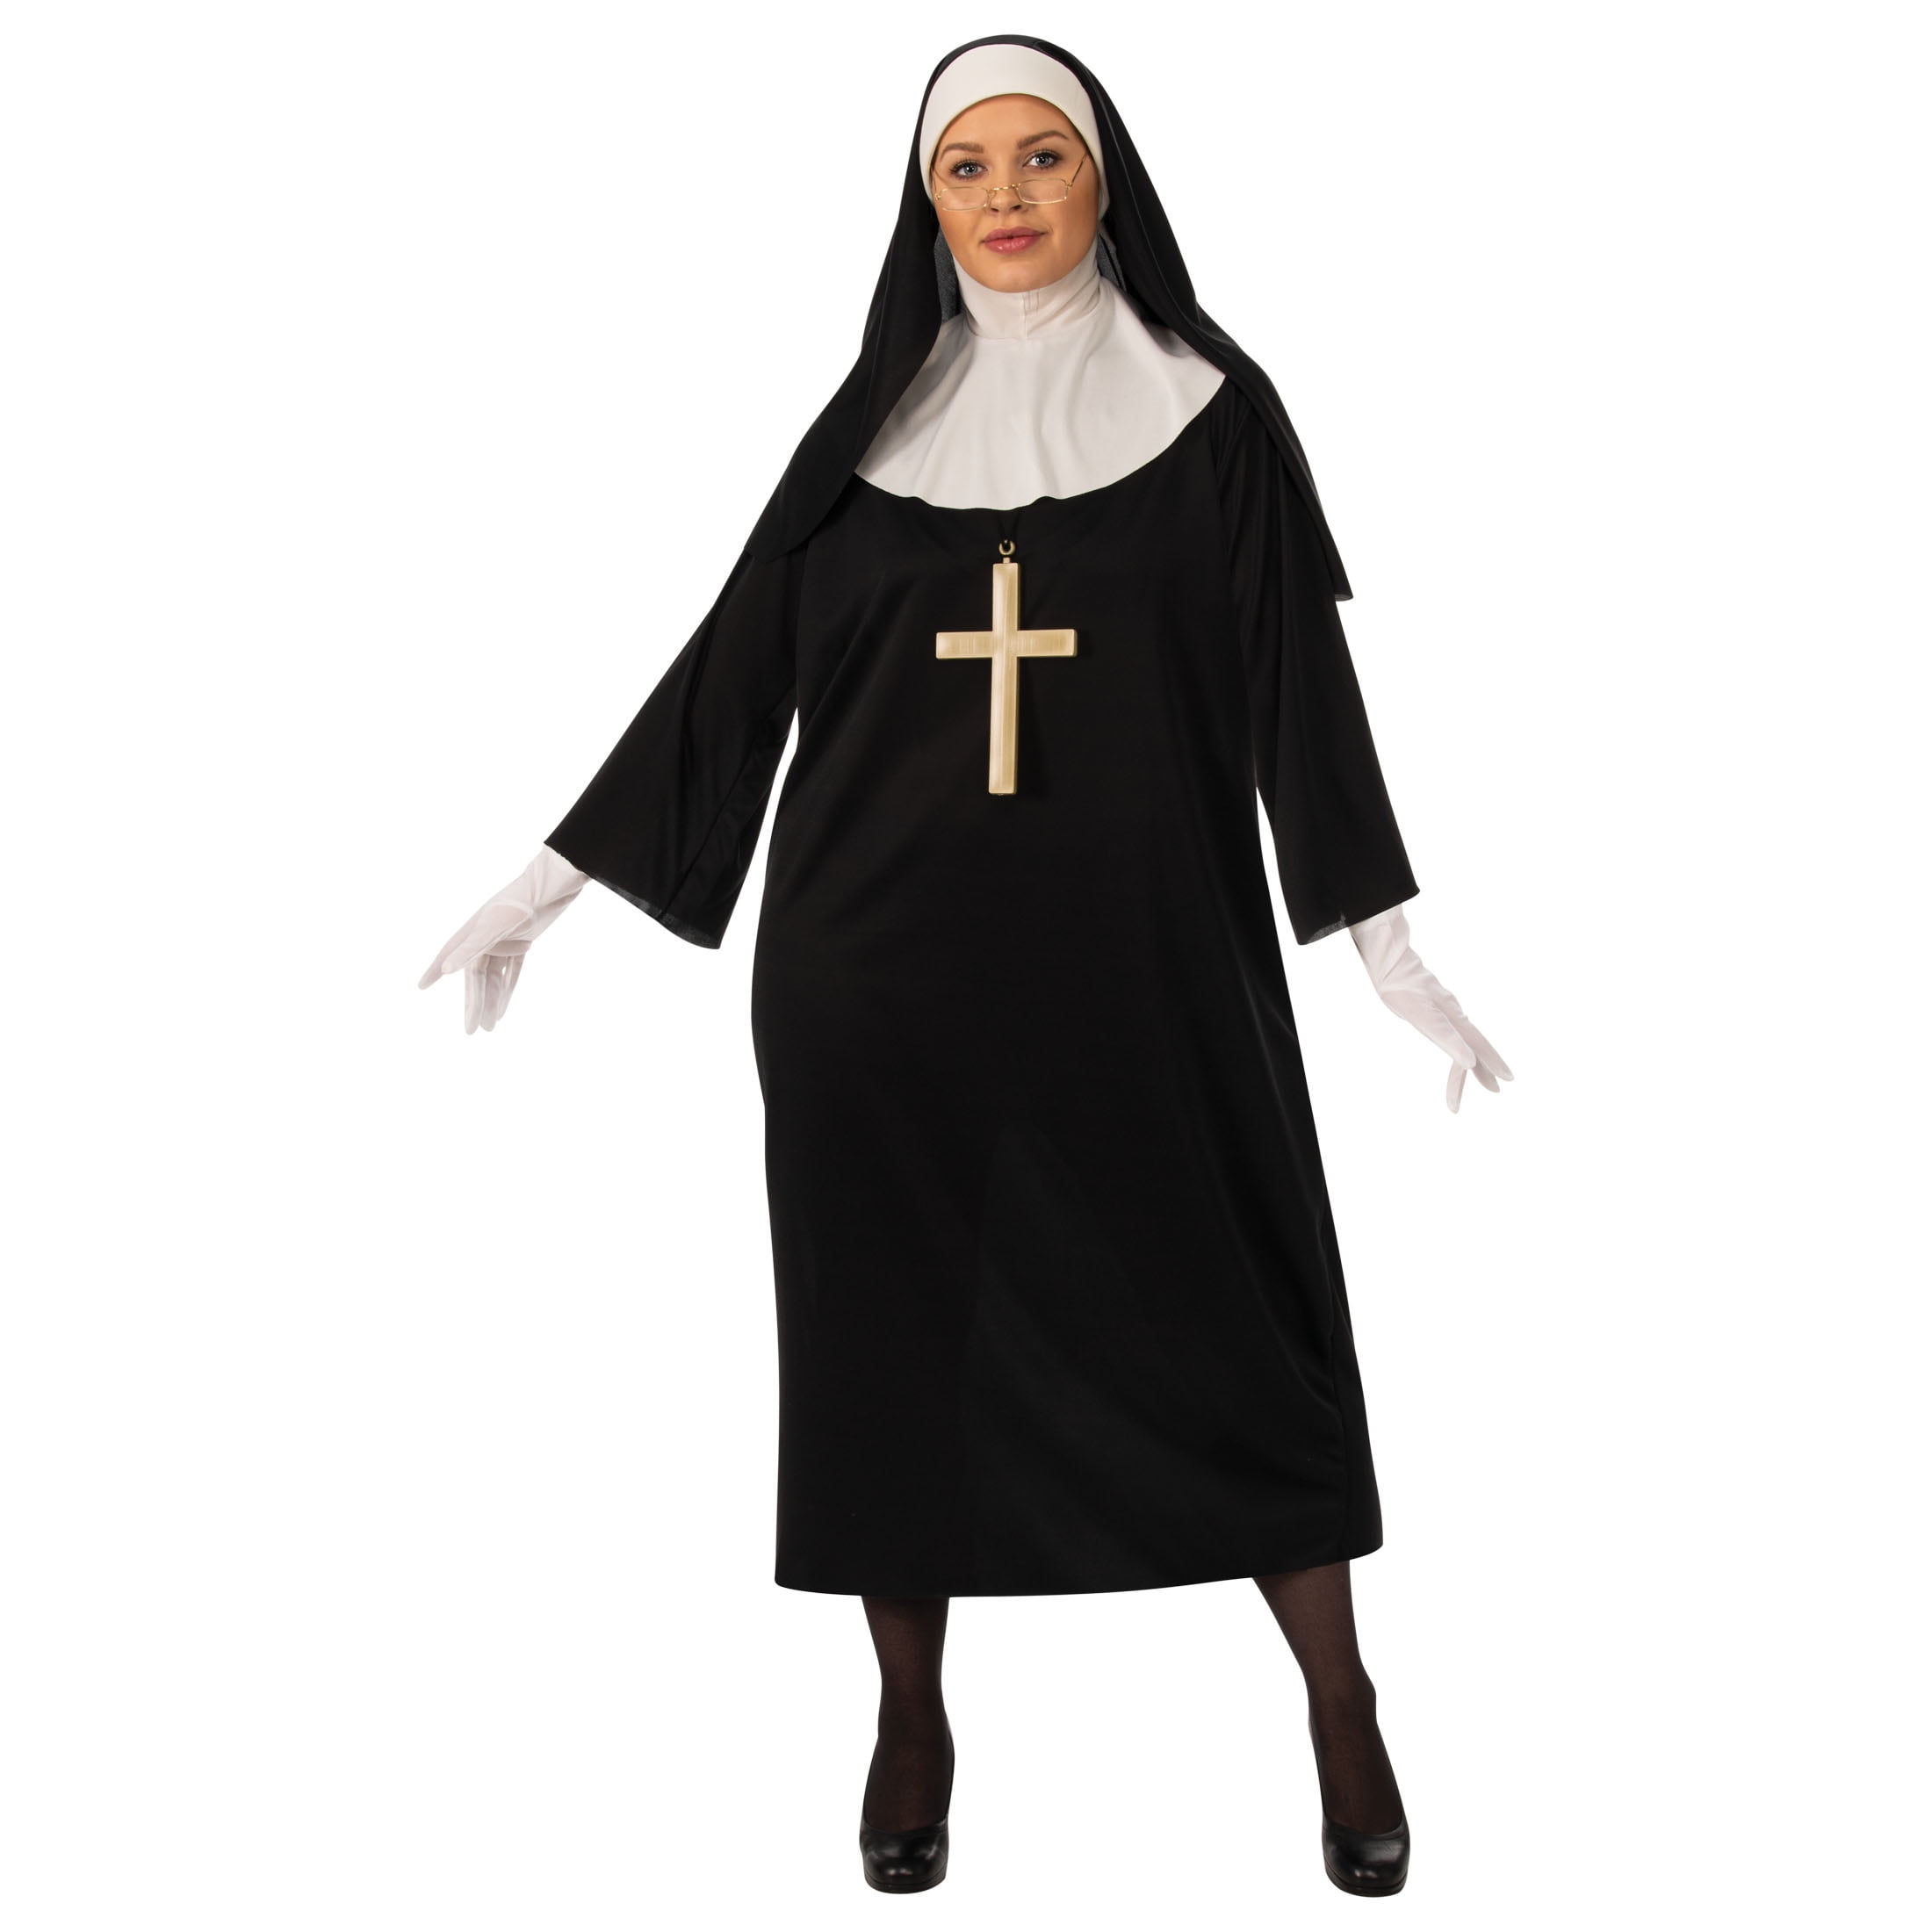 Nun Adult Women's Halloween Costume M By Rubies II - Walmart.com